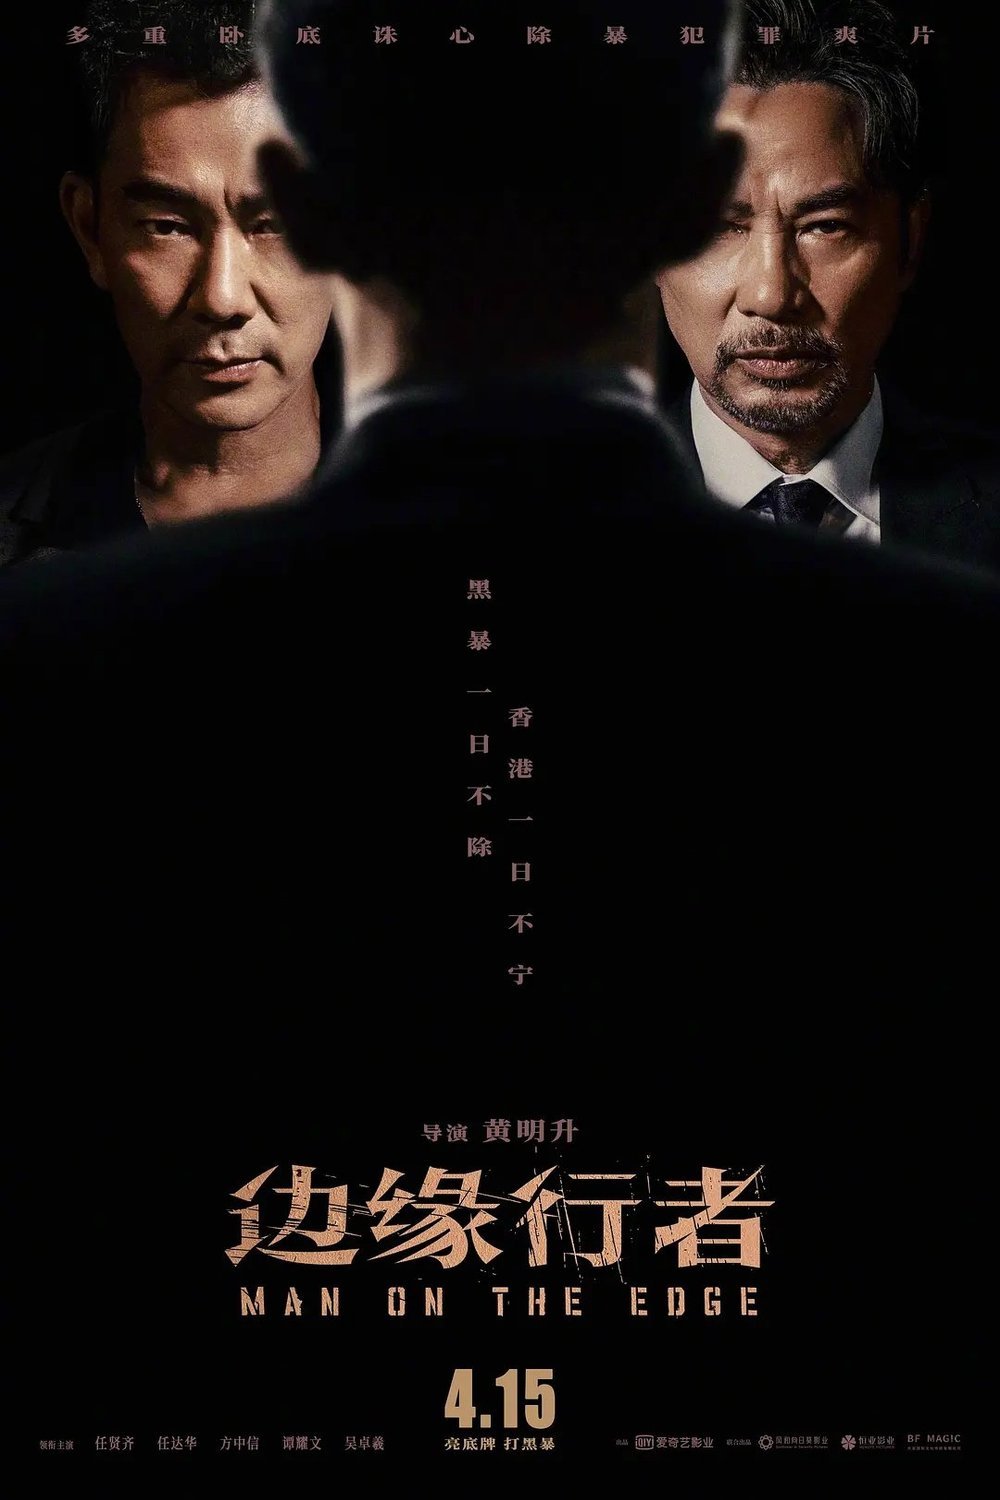 Mandarin poster of the movie Bin yun haang ze